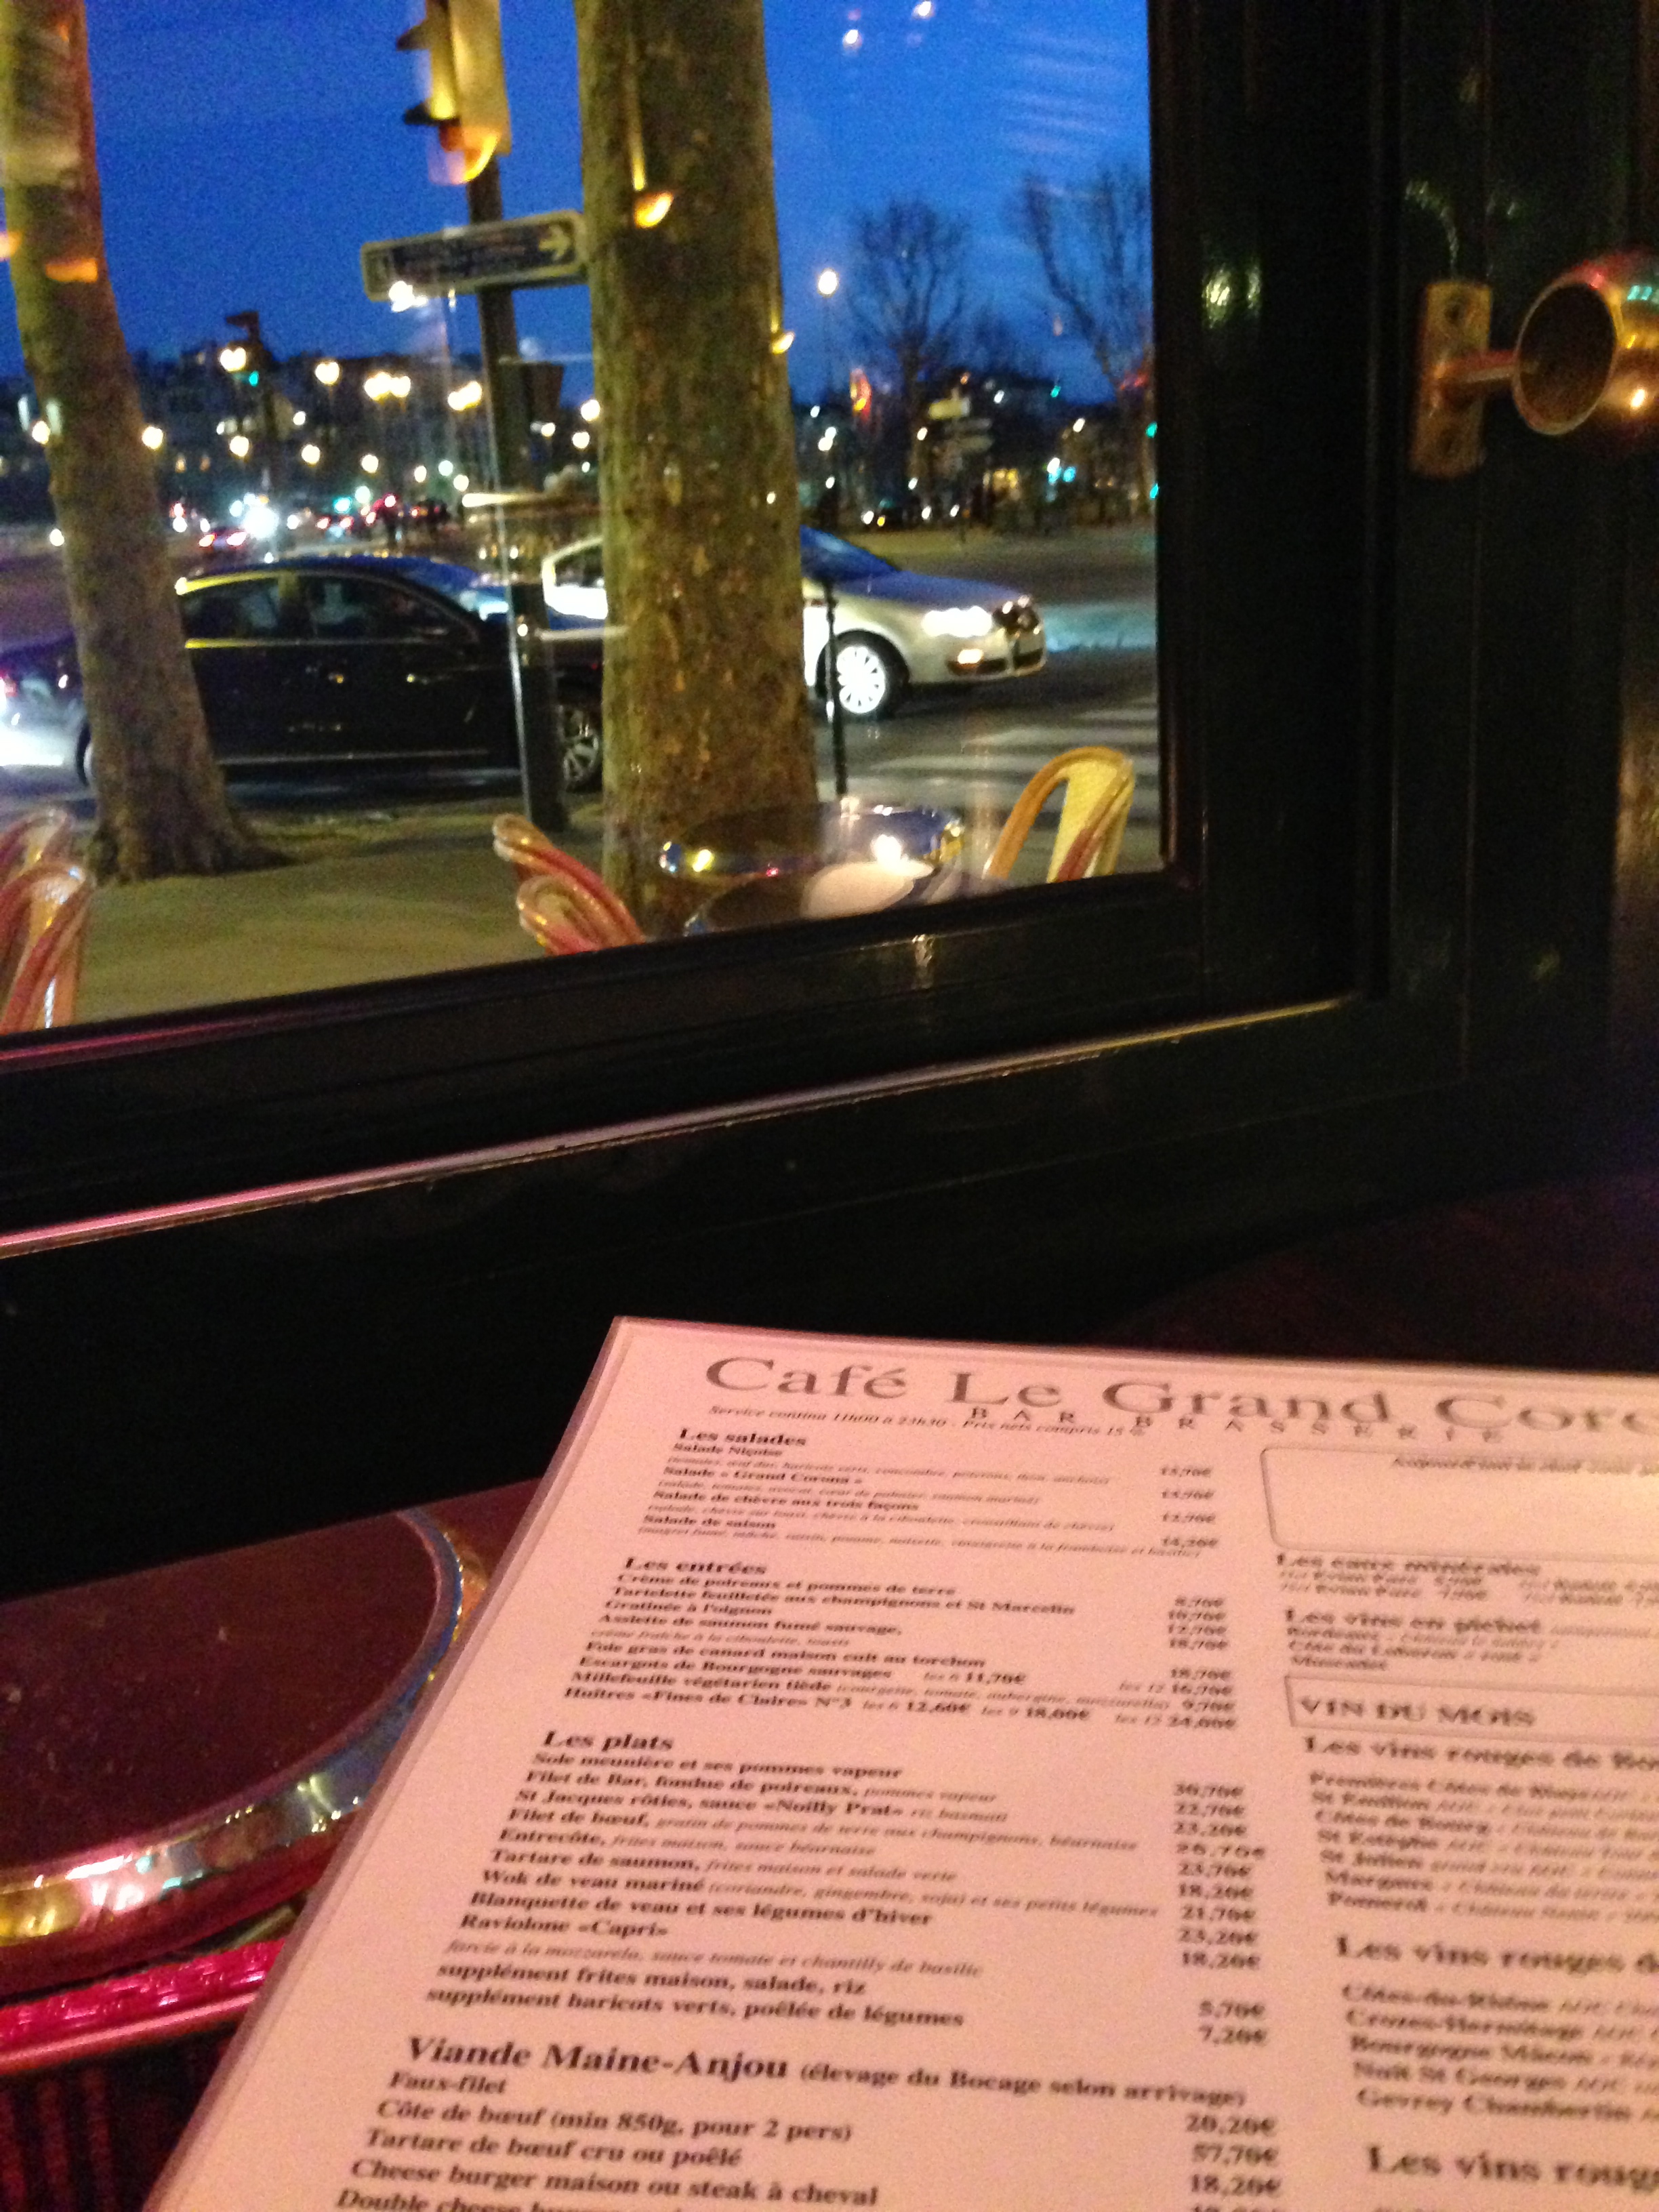 Café le Grand Corona in Paris 